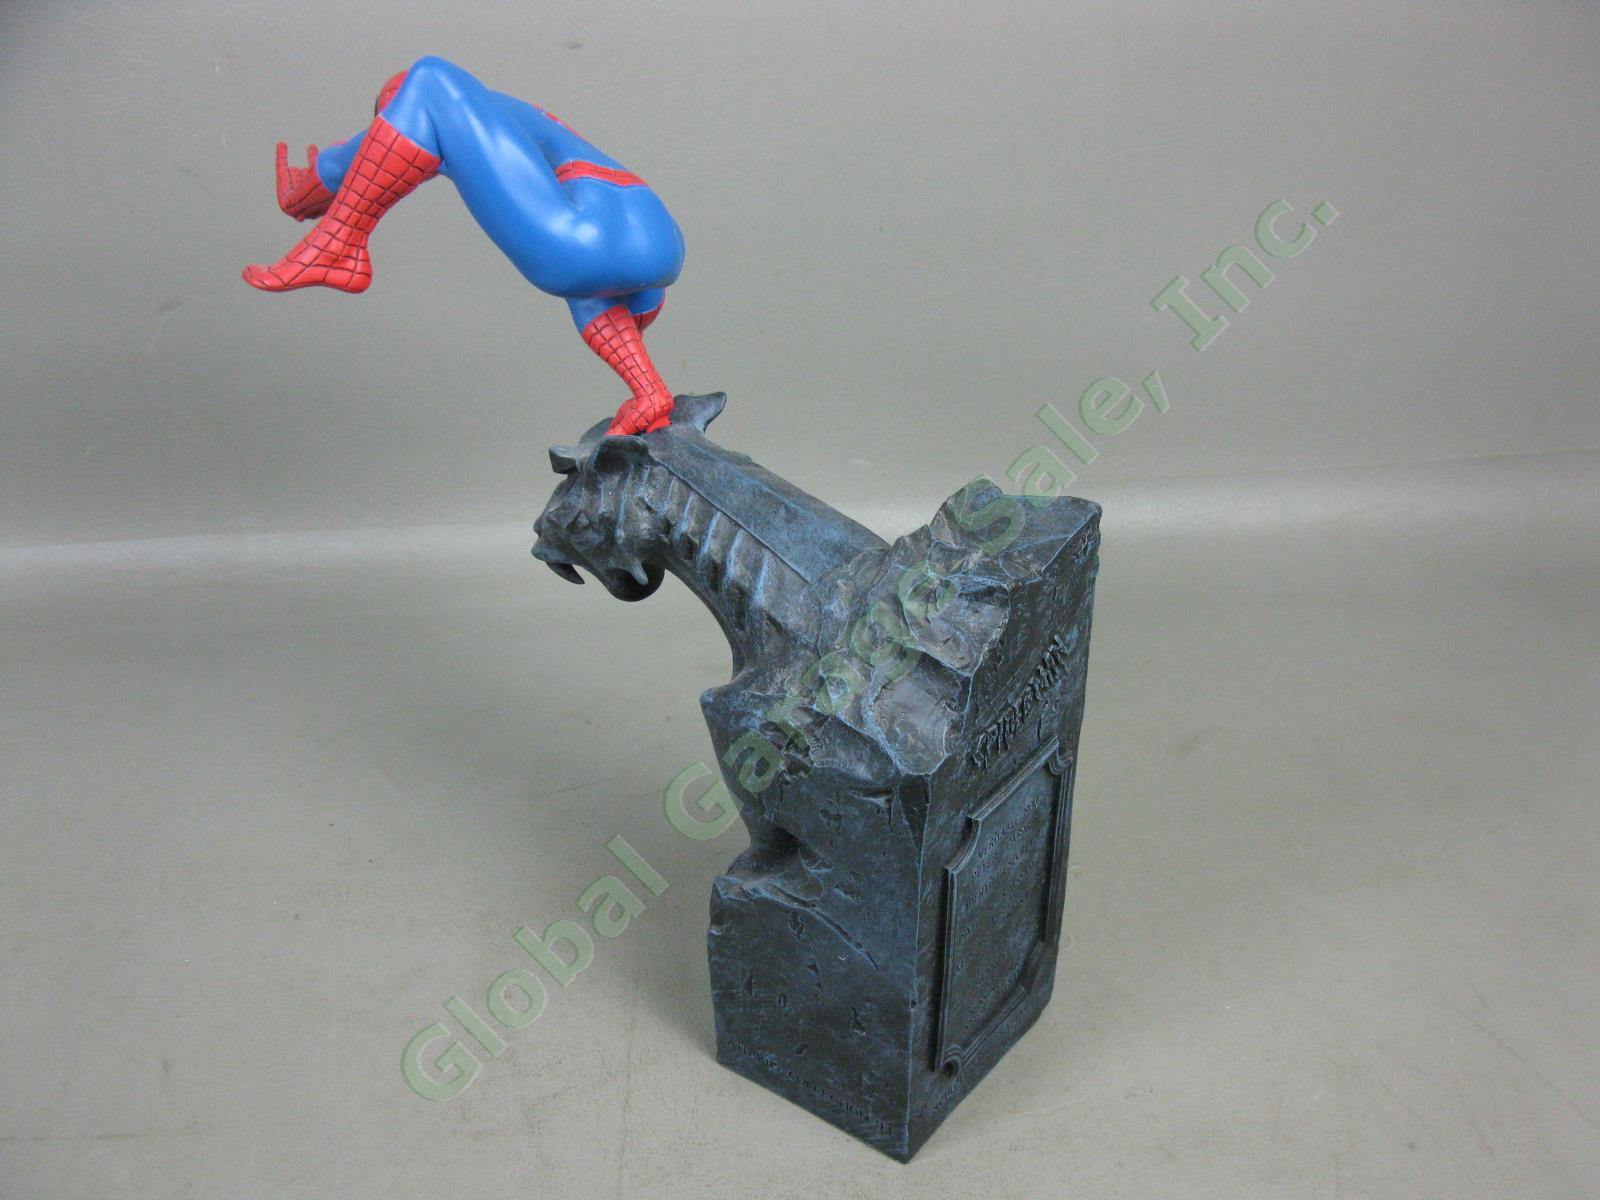 NIB 1997 Attakus Marvel Comics Spiderman Gargoyle Porcelain Statue C400 Bombyx 6